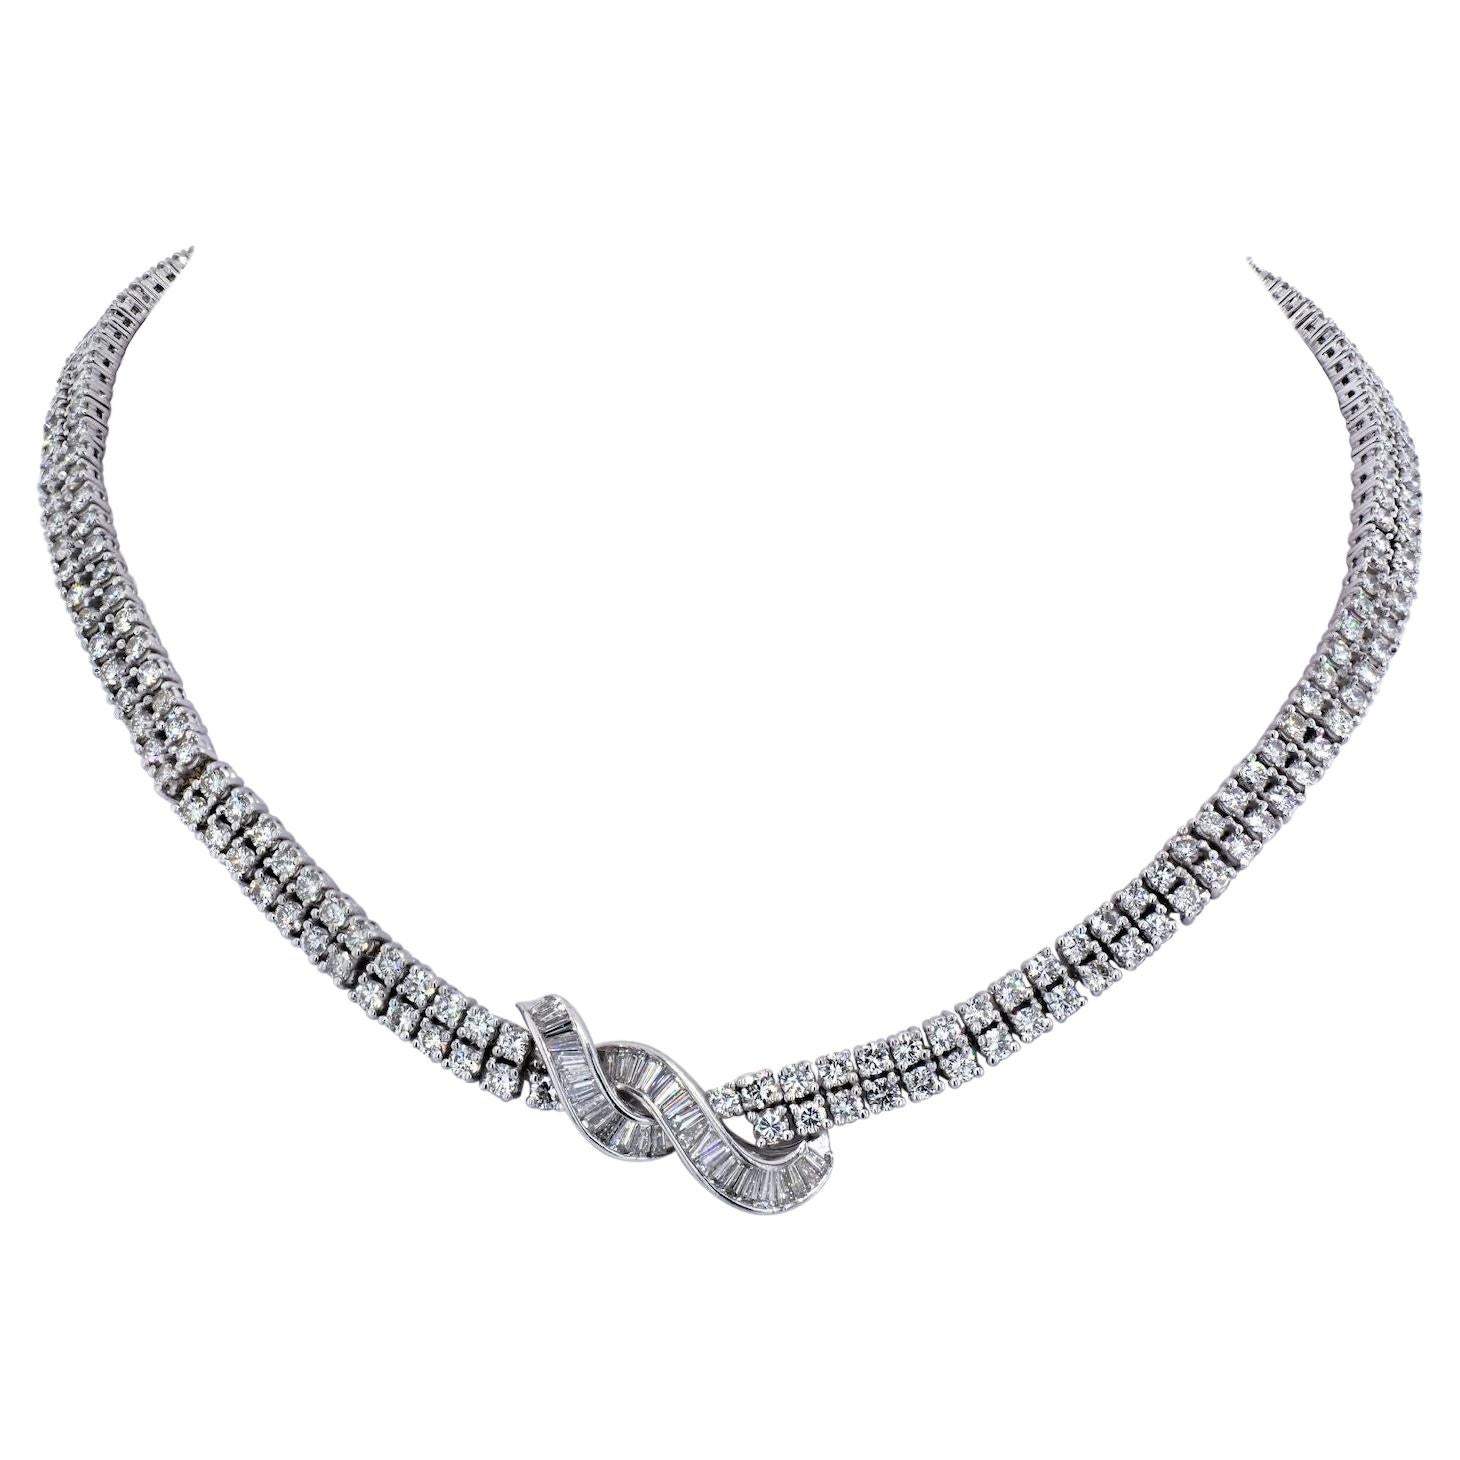 18k White Gold 20 Carat Round Cut Diamond Tennis Necklace